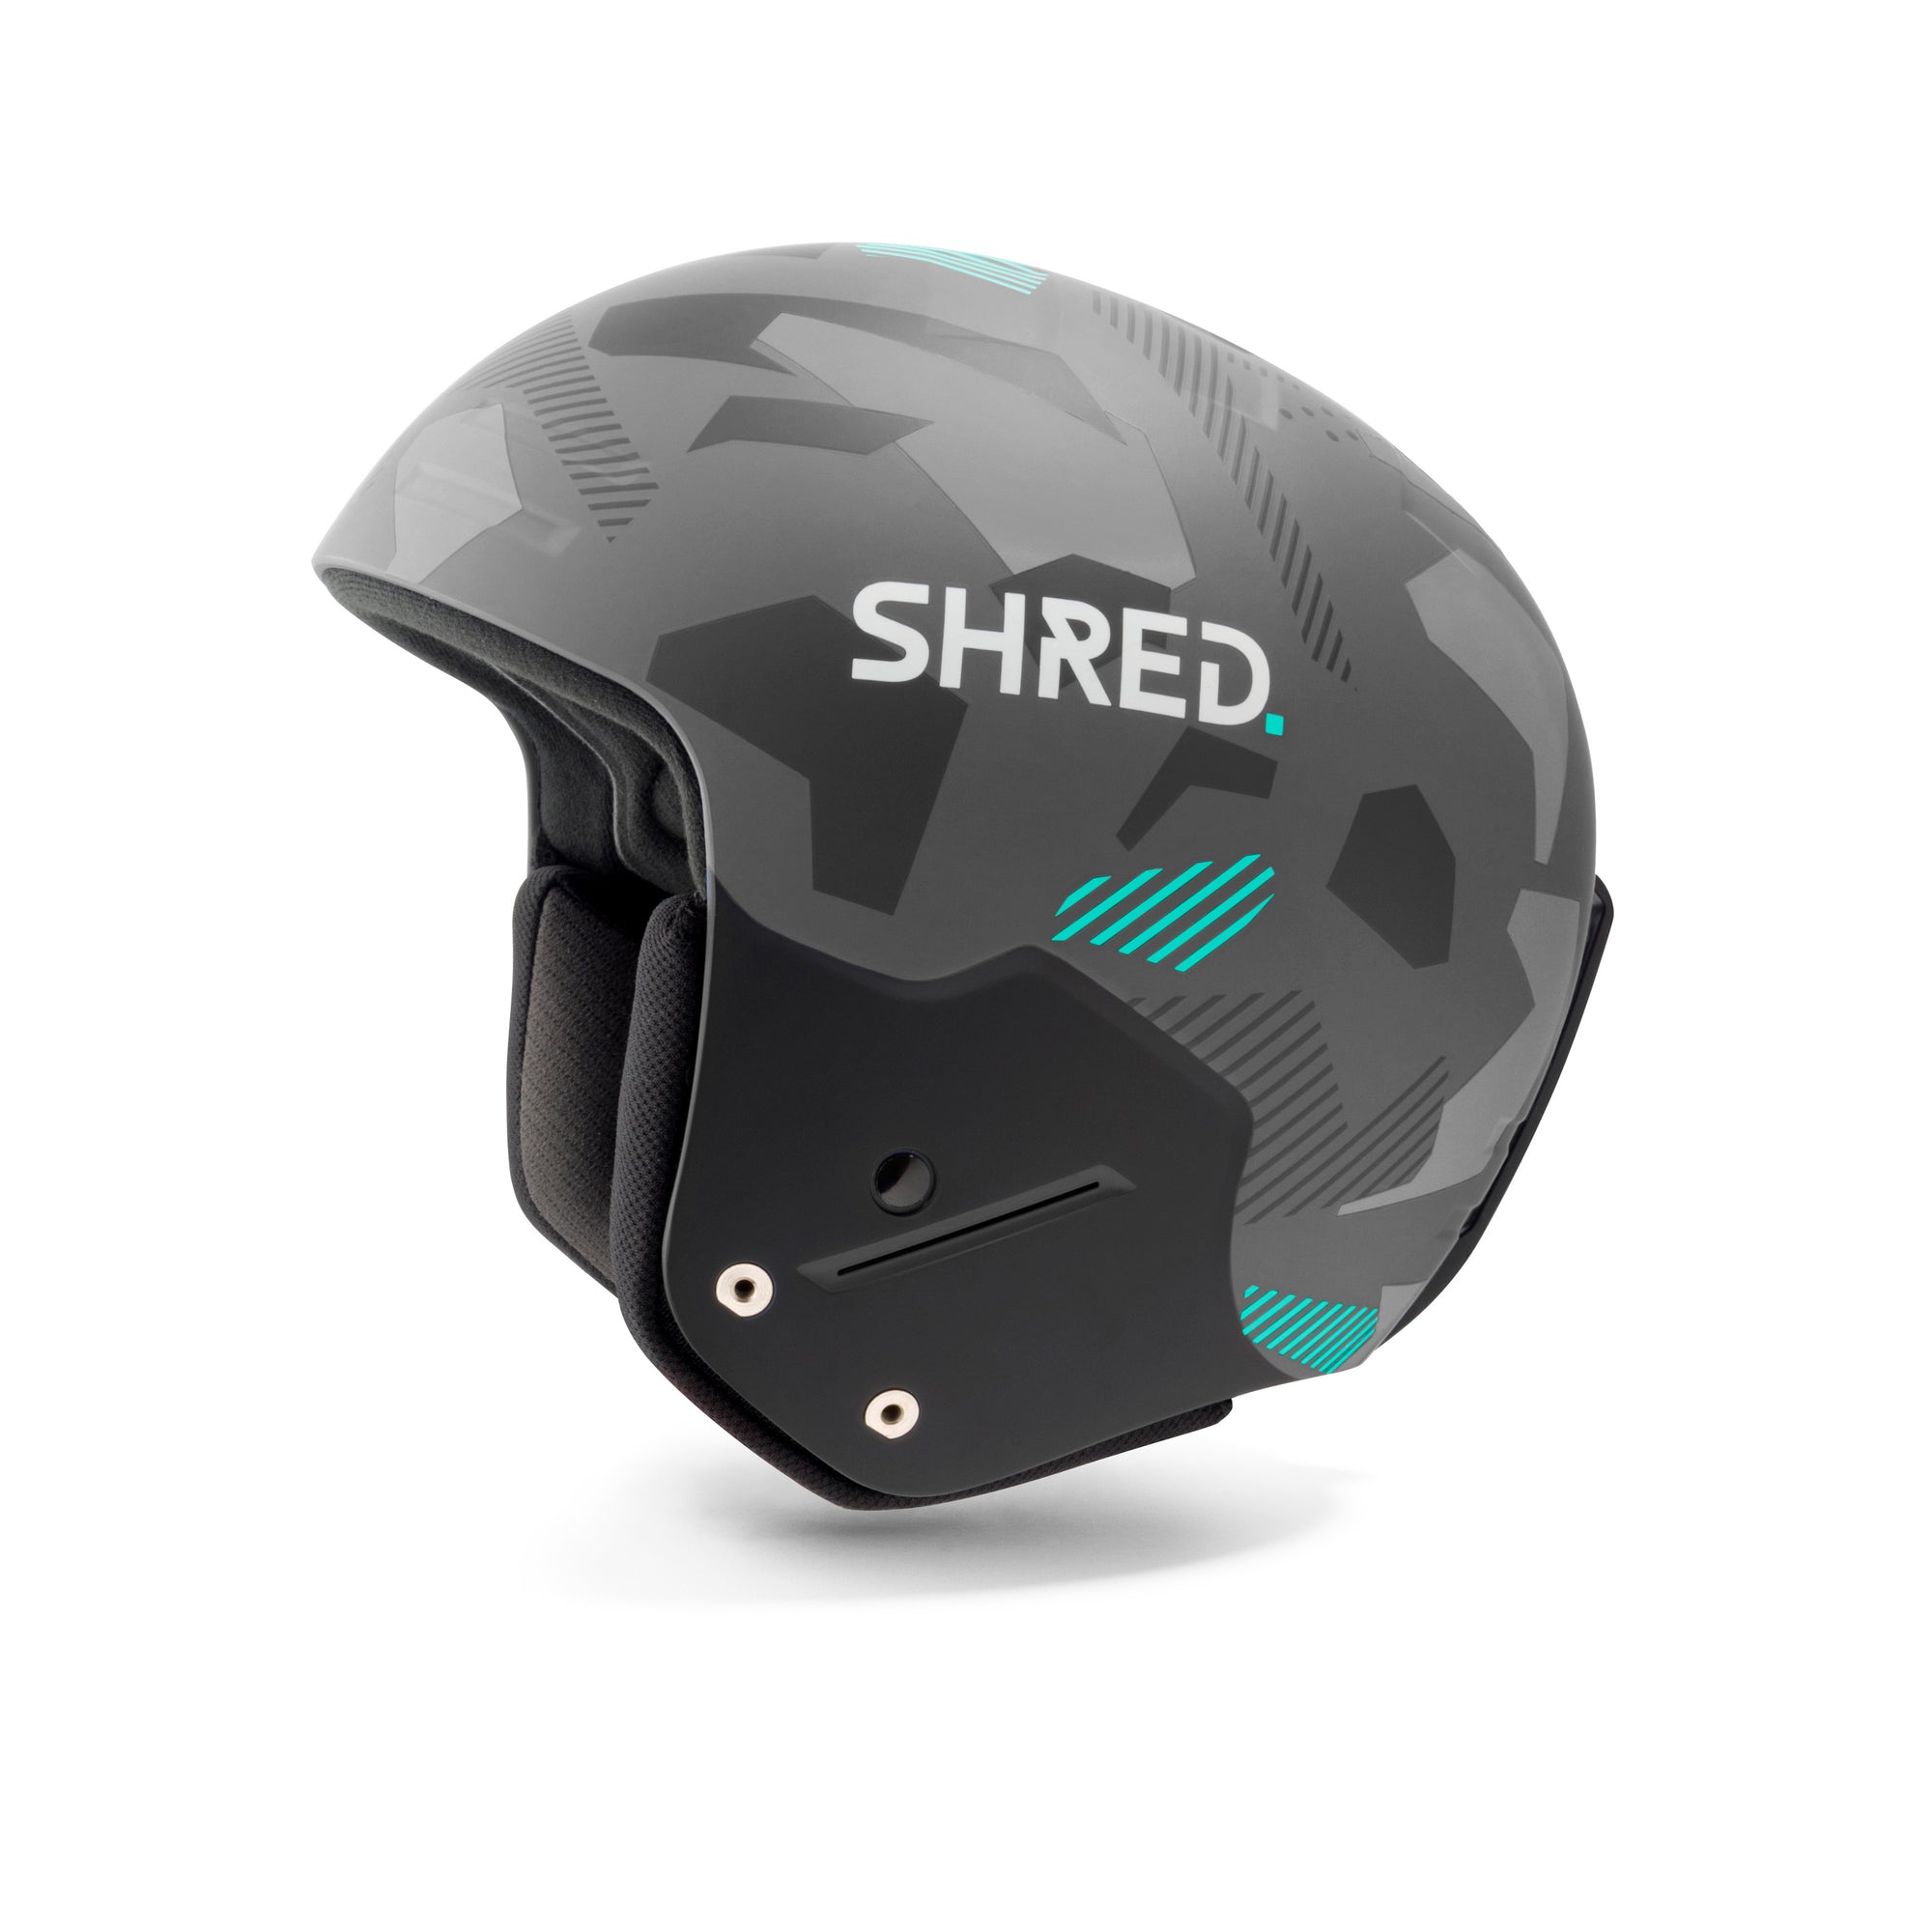 Basher Ultimate - Ski Helmets|HEBSUN32M,HEBSUN32S